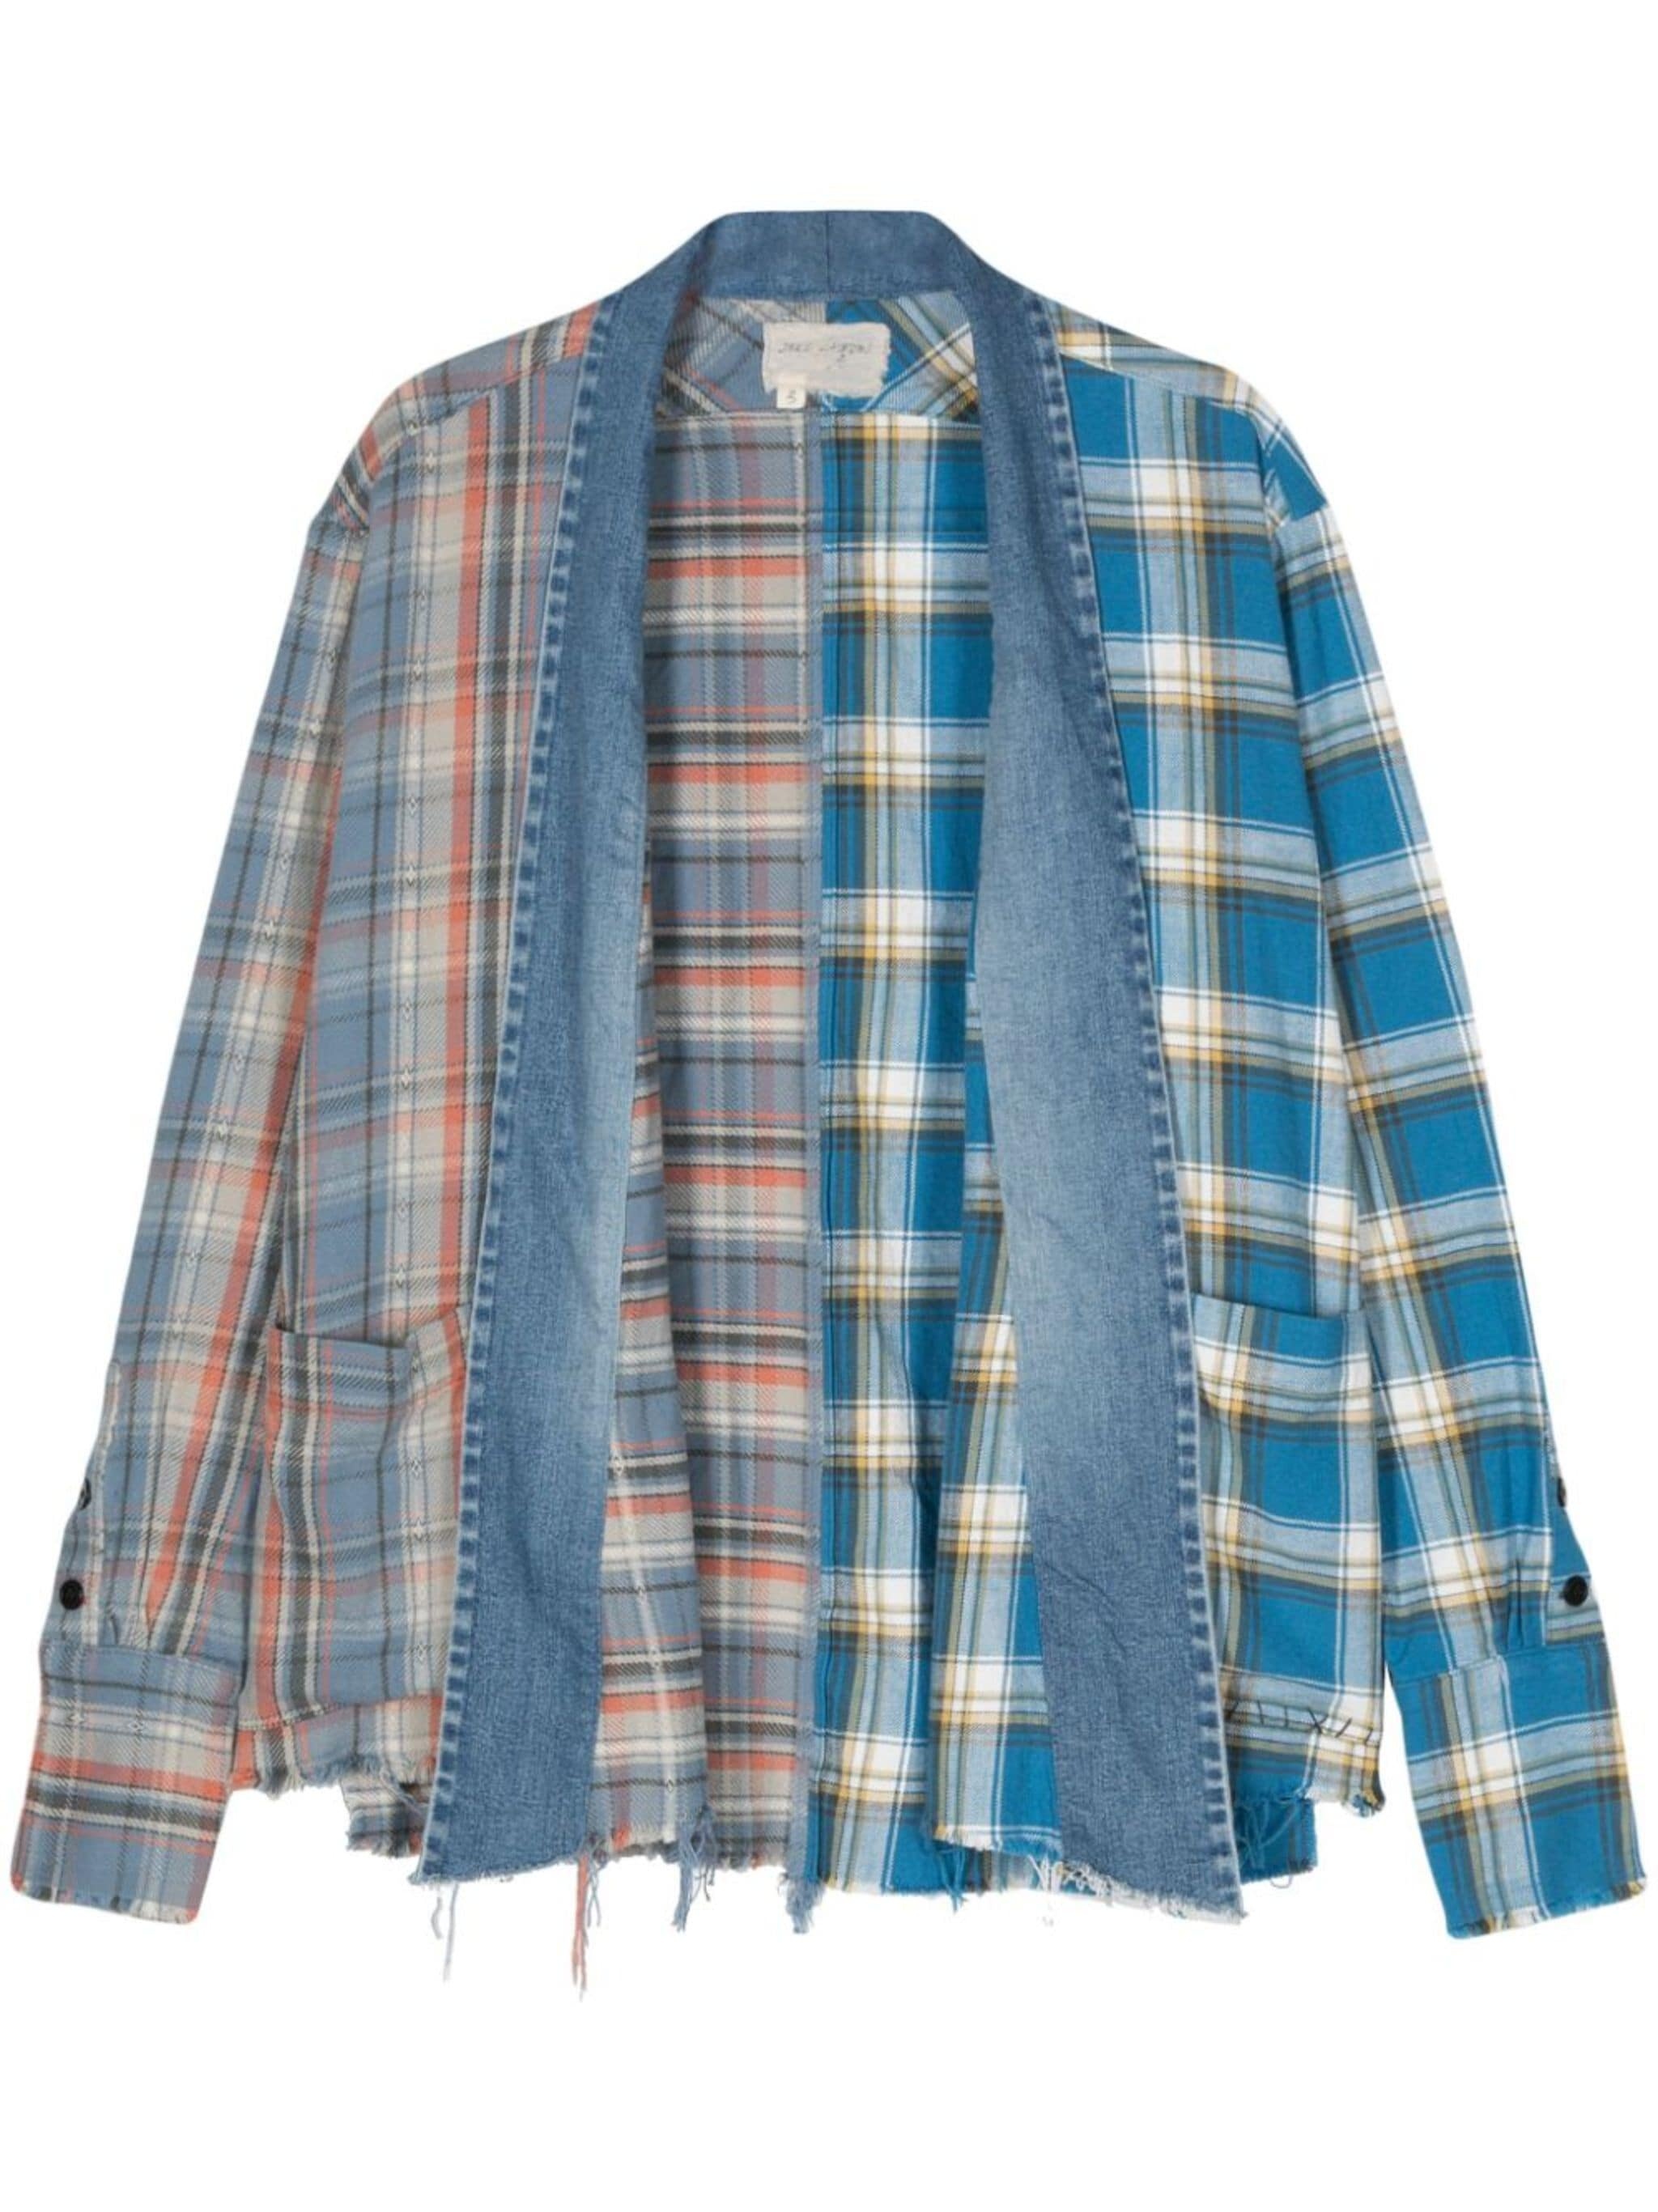 GL1 Mixed Plaid shirt jacket - 1